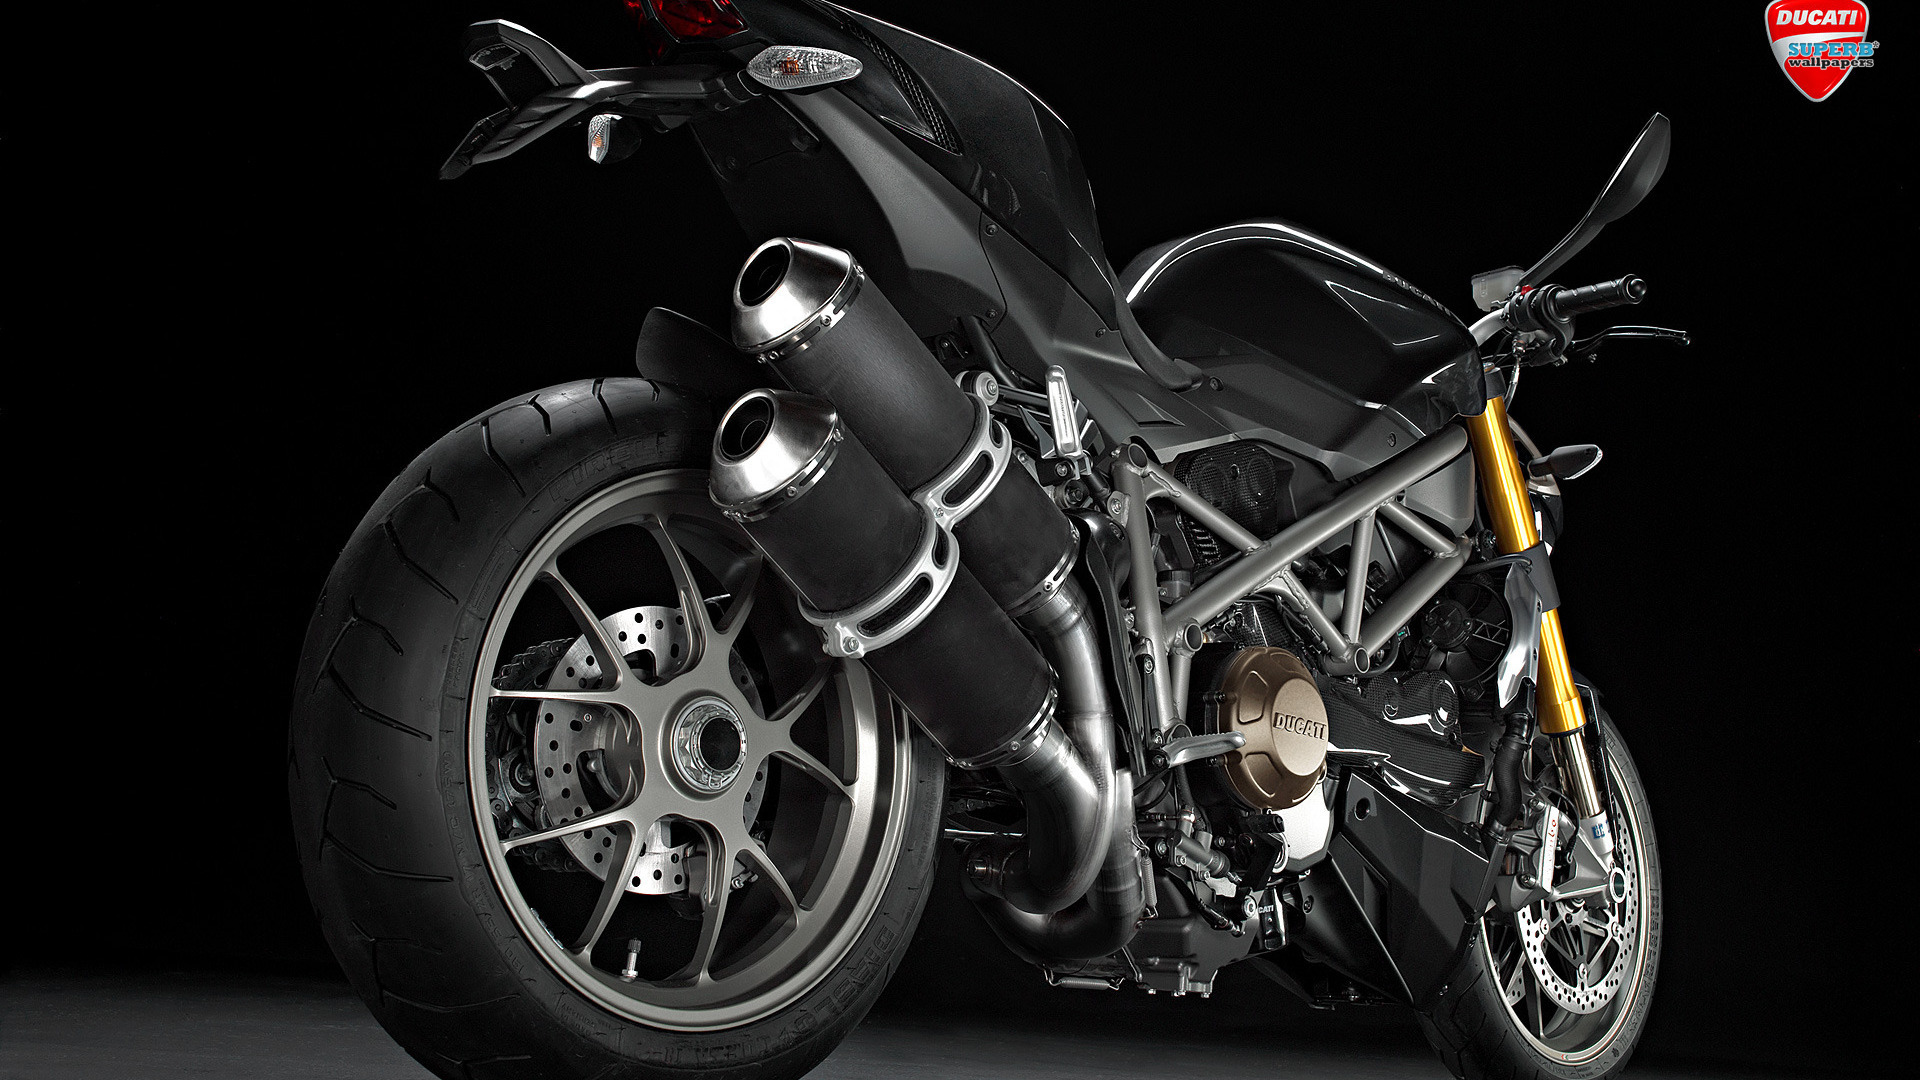 Ducati Streetfighter Wallpaper 1080p - image #124